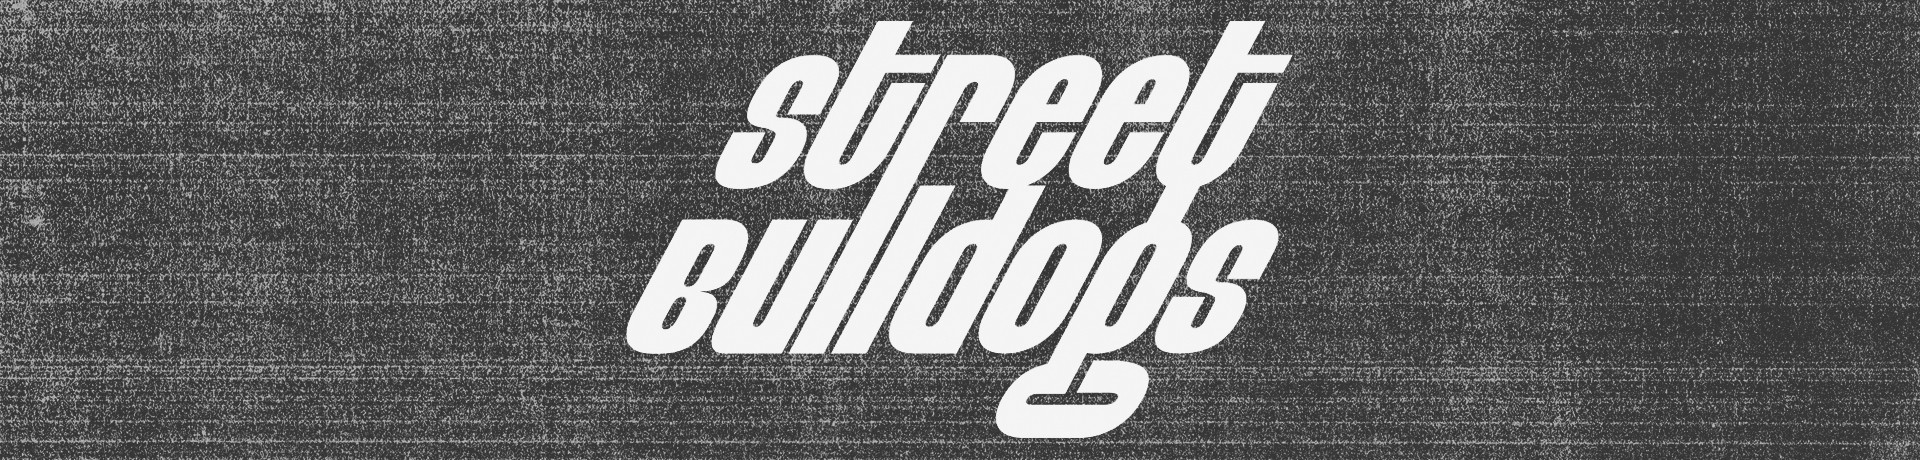 Street Bulldogs - Bulldog [Chaveiro]